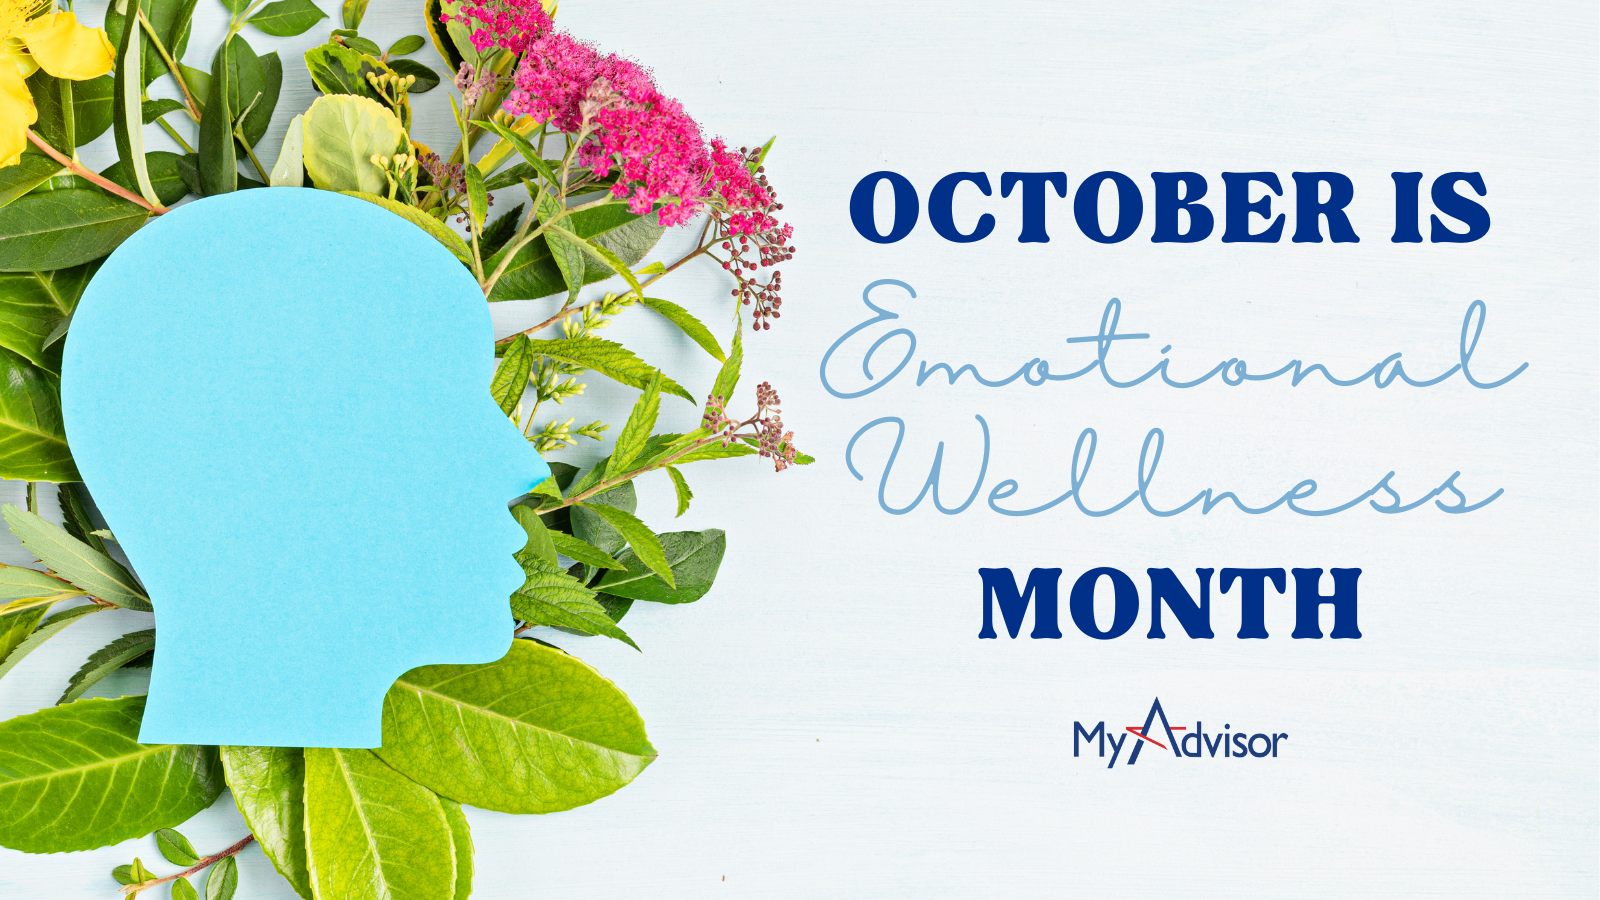 Emotional Wellness Month